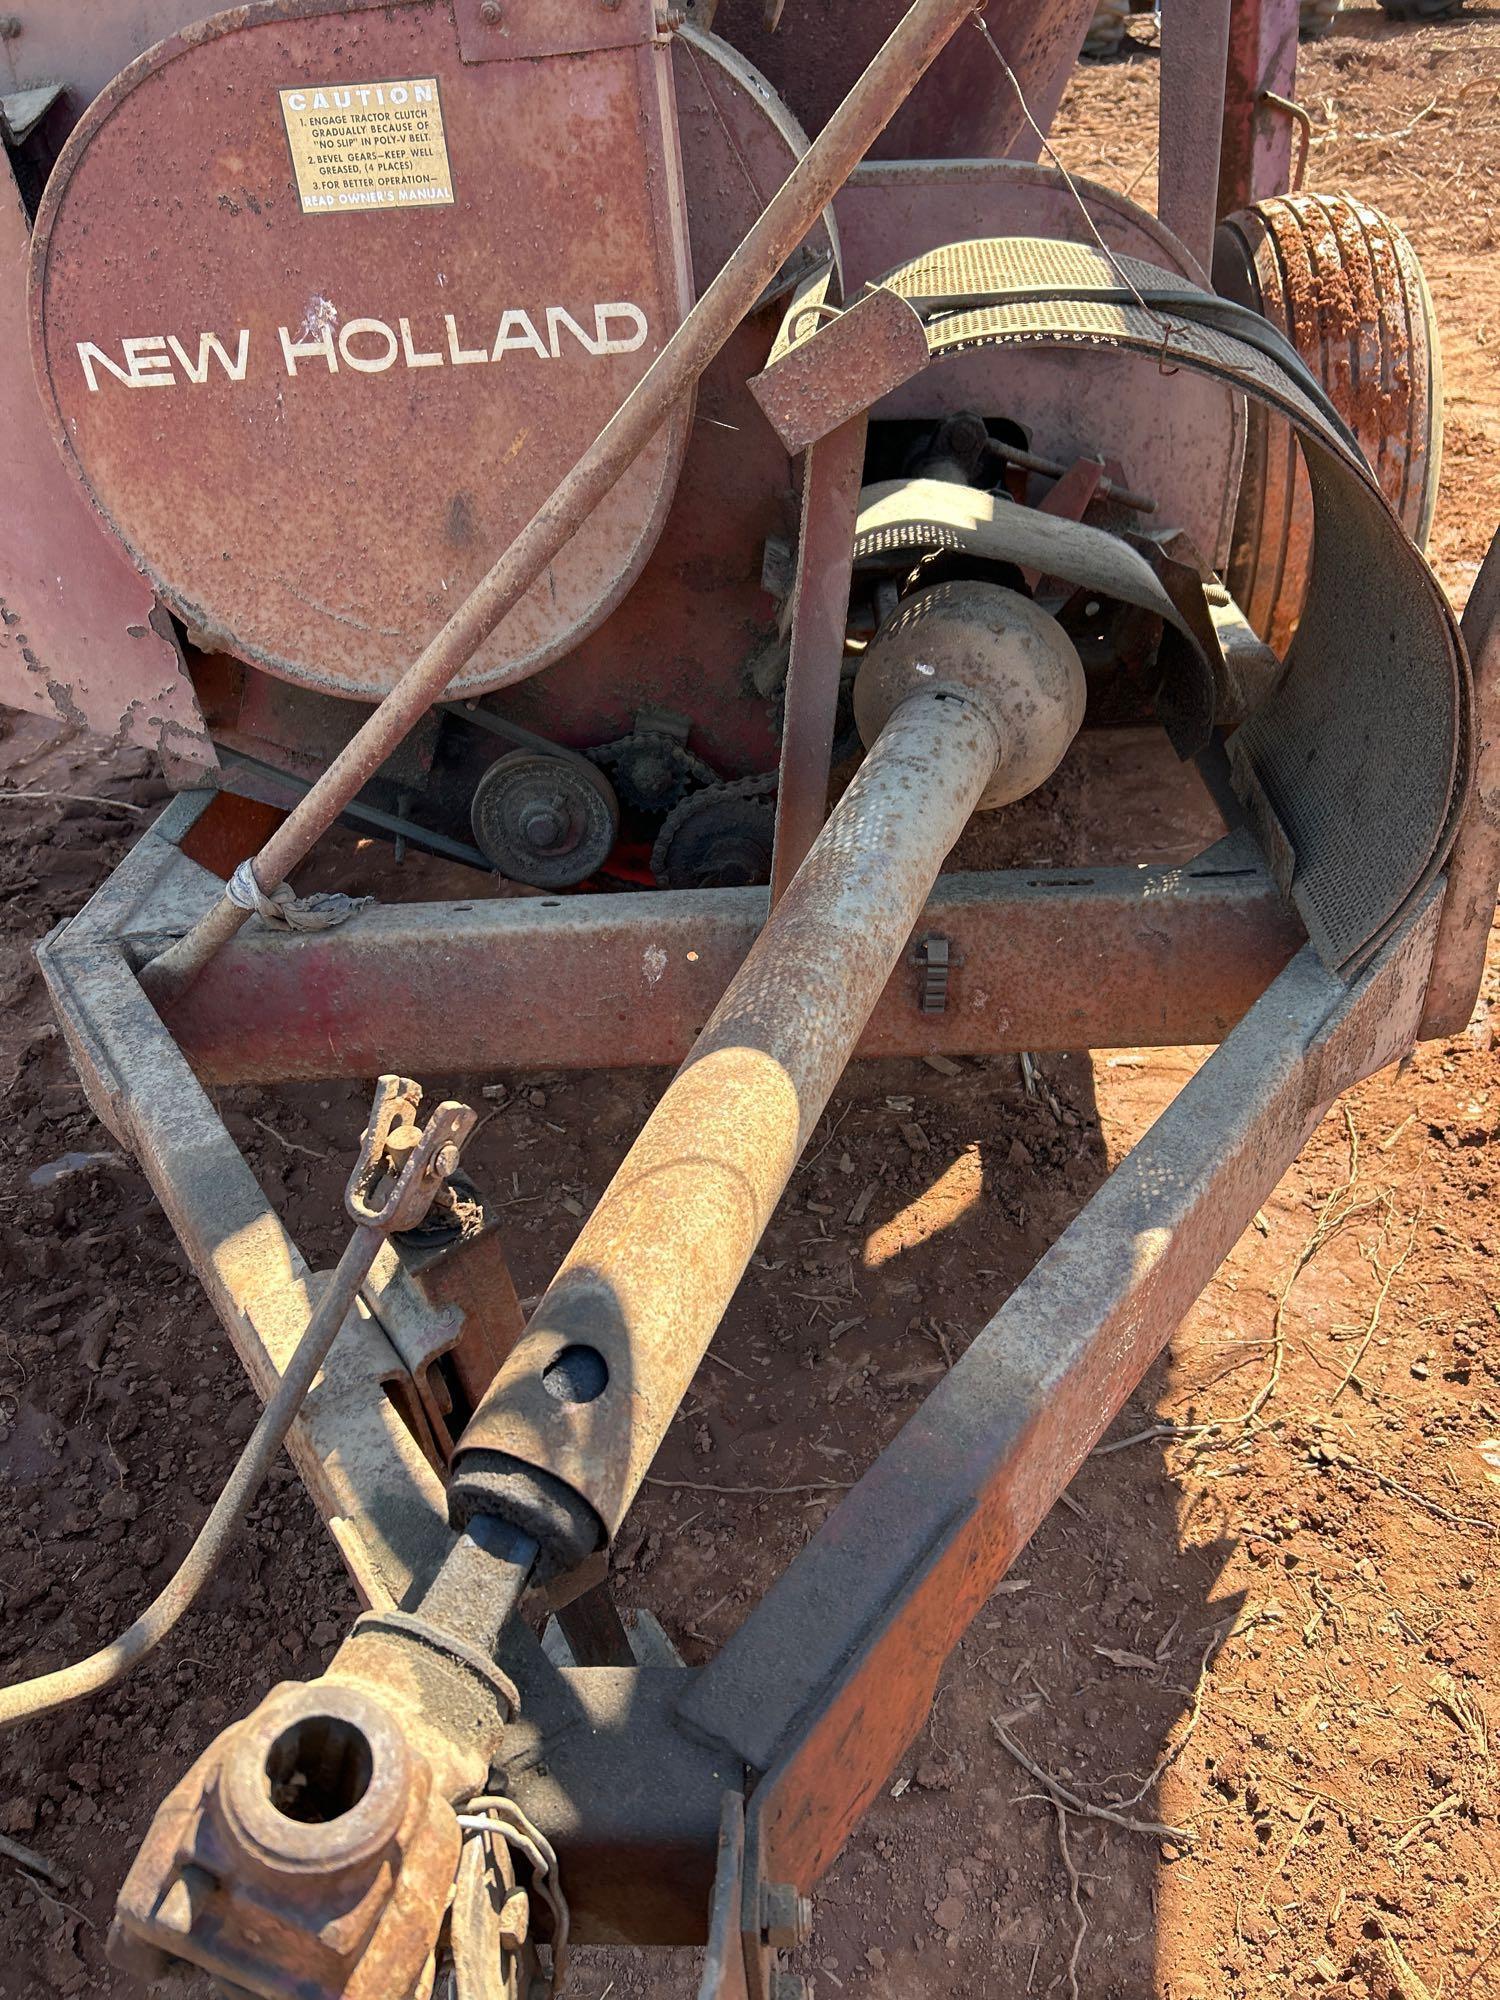 New Holland 354 S/A Grain Hammer Drill